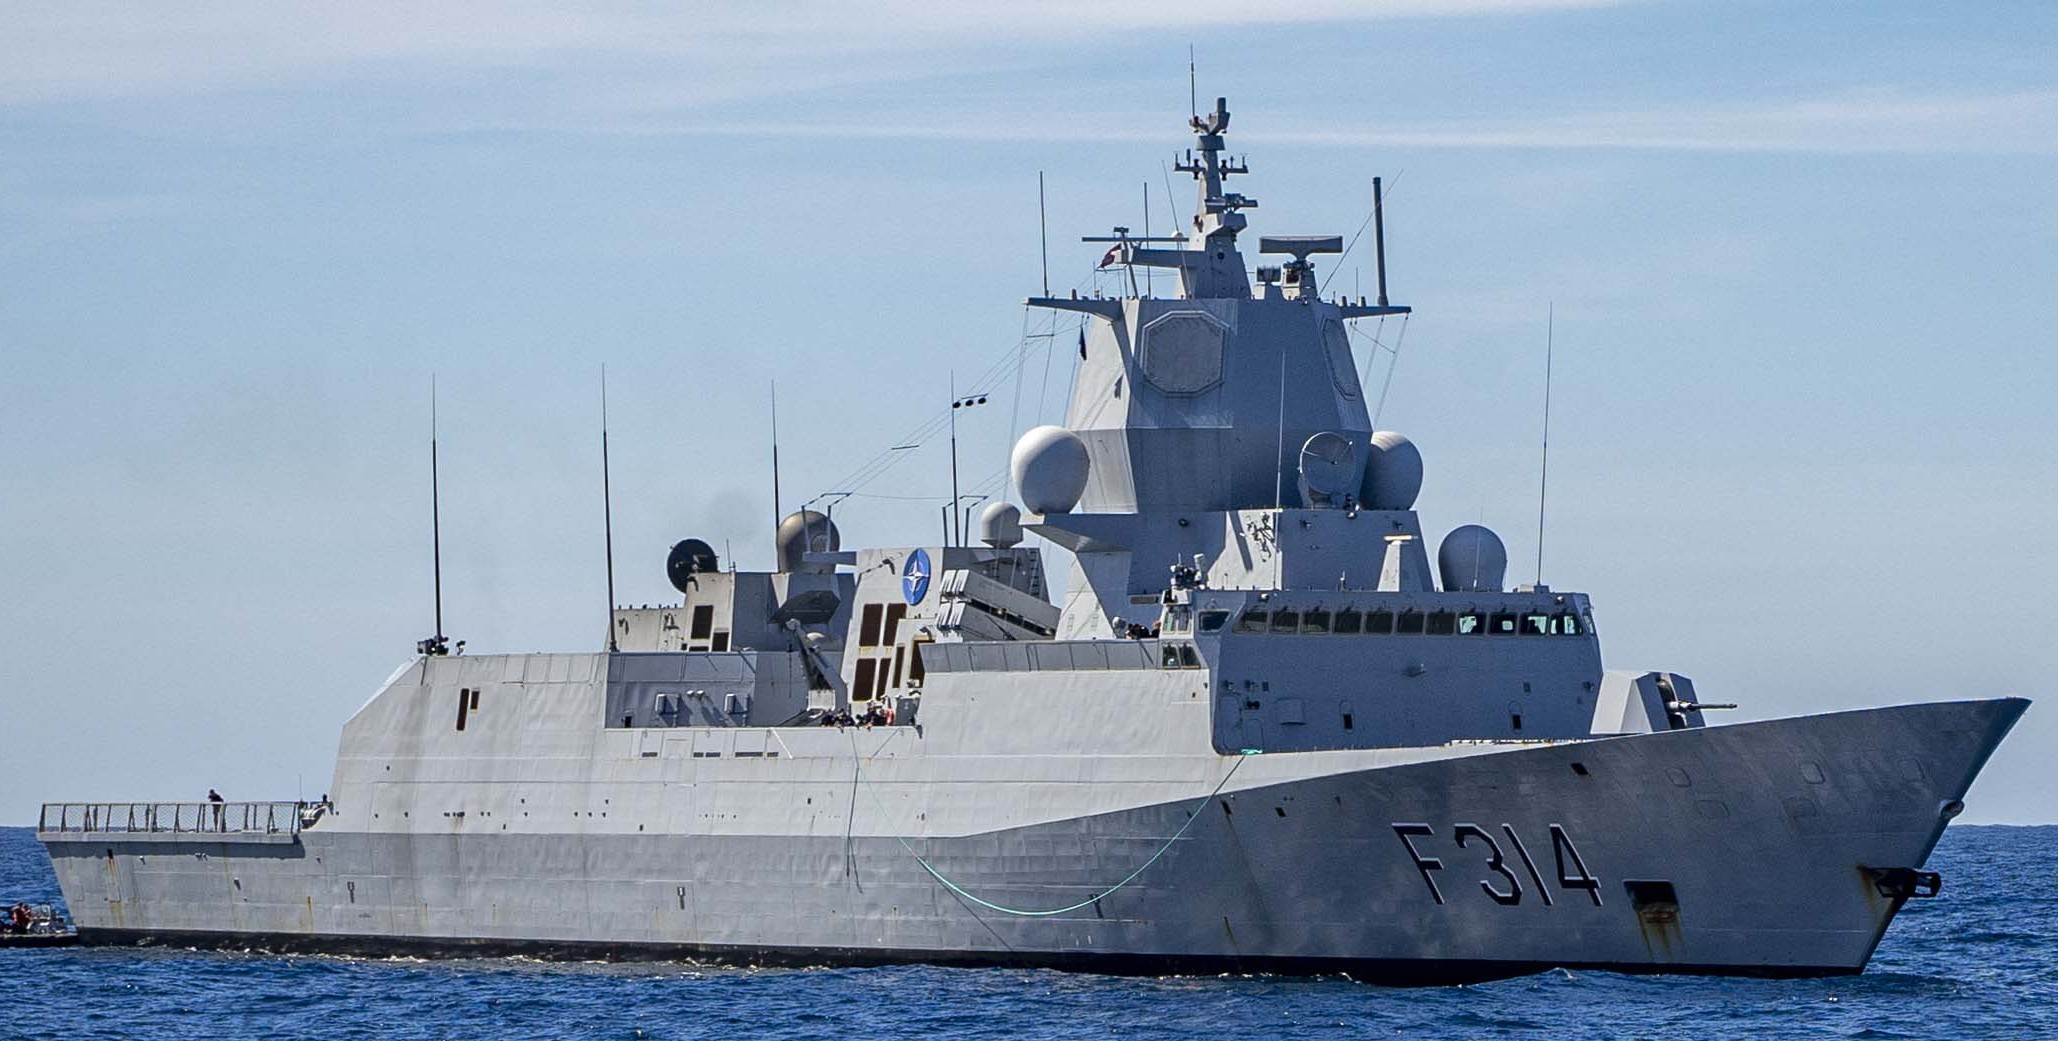 f-314 thor heyerdahl hnoms knm fridtjof nansen class frigate royal norwegian navy 52